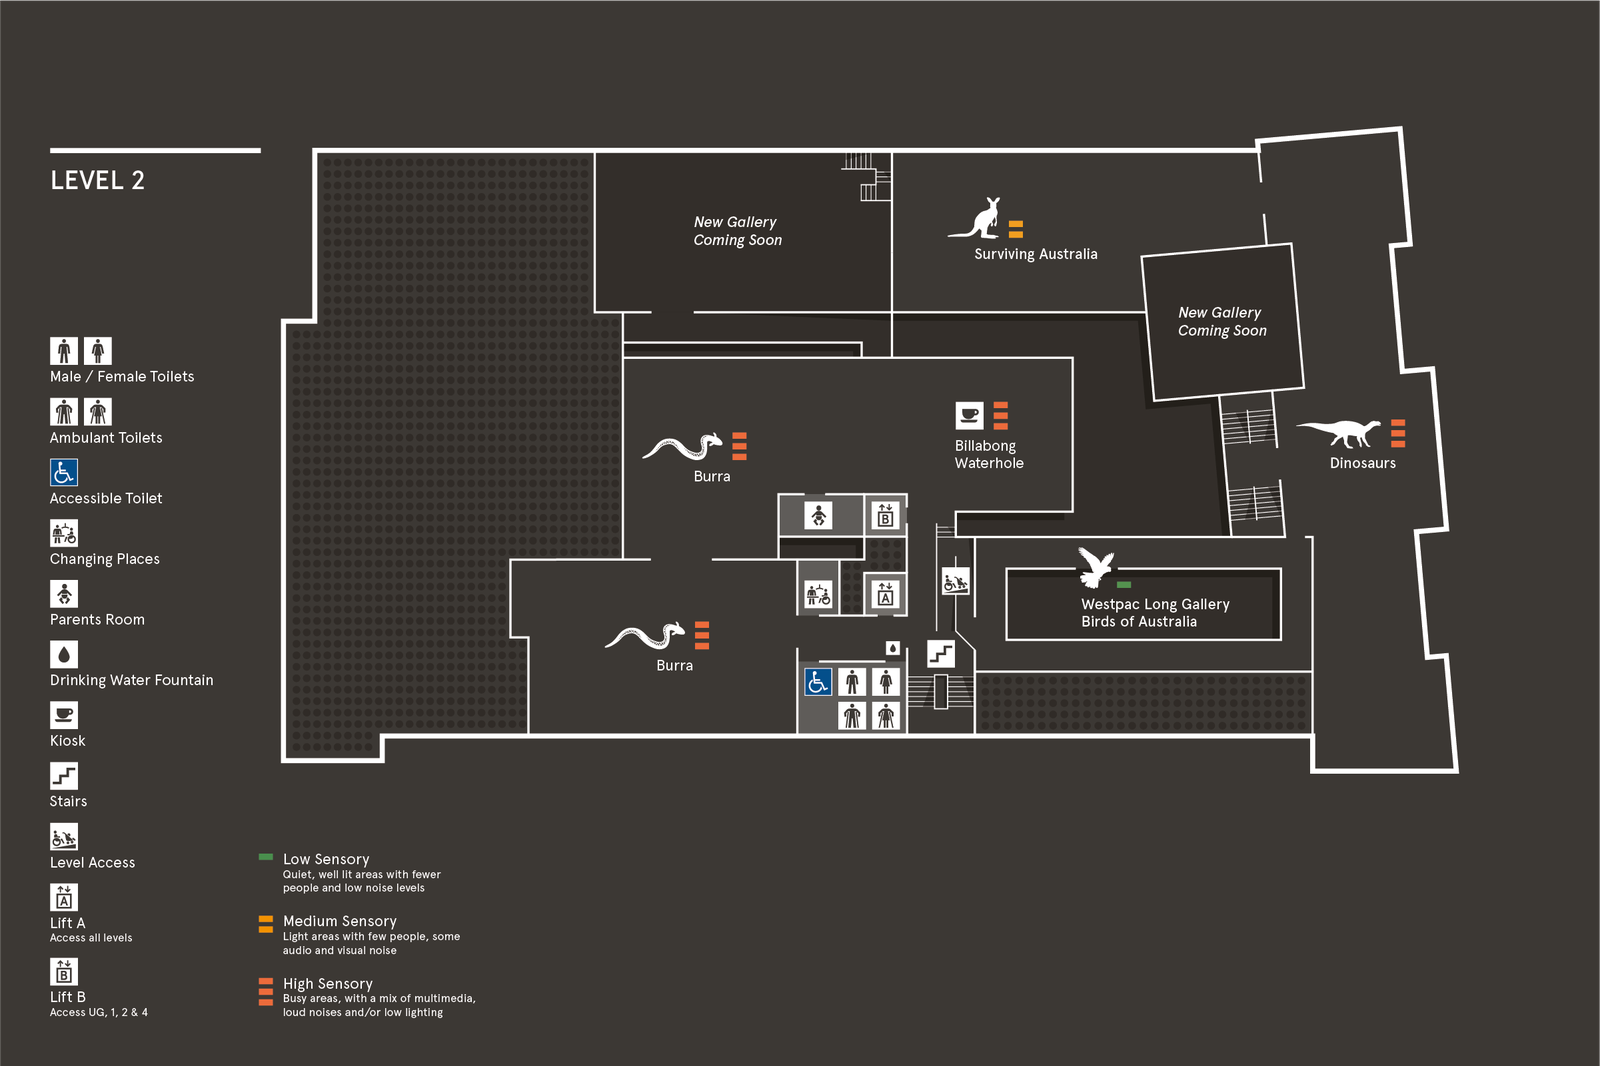 Australian Museum visitor map of Level 2